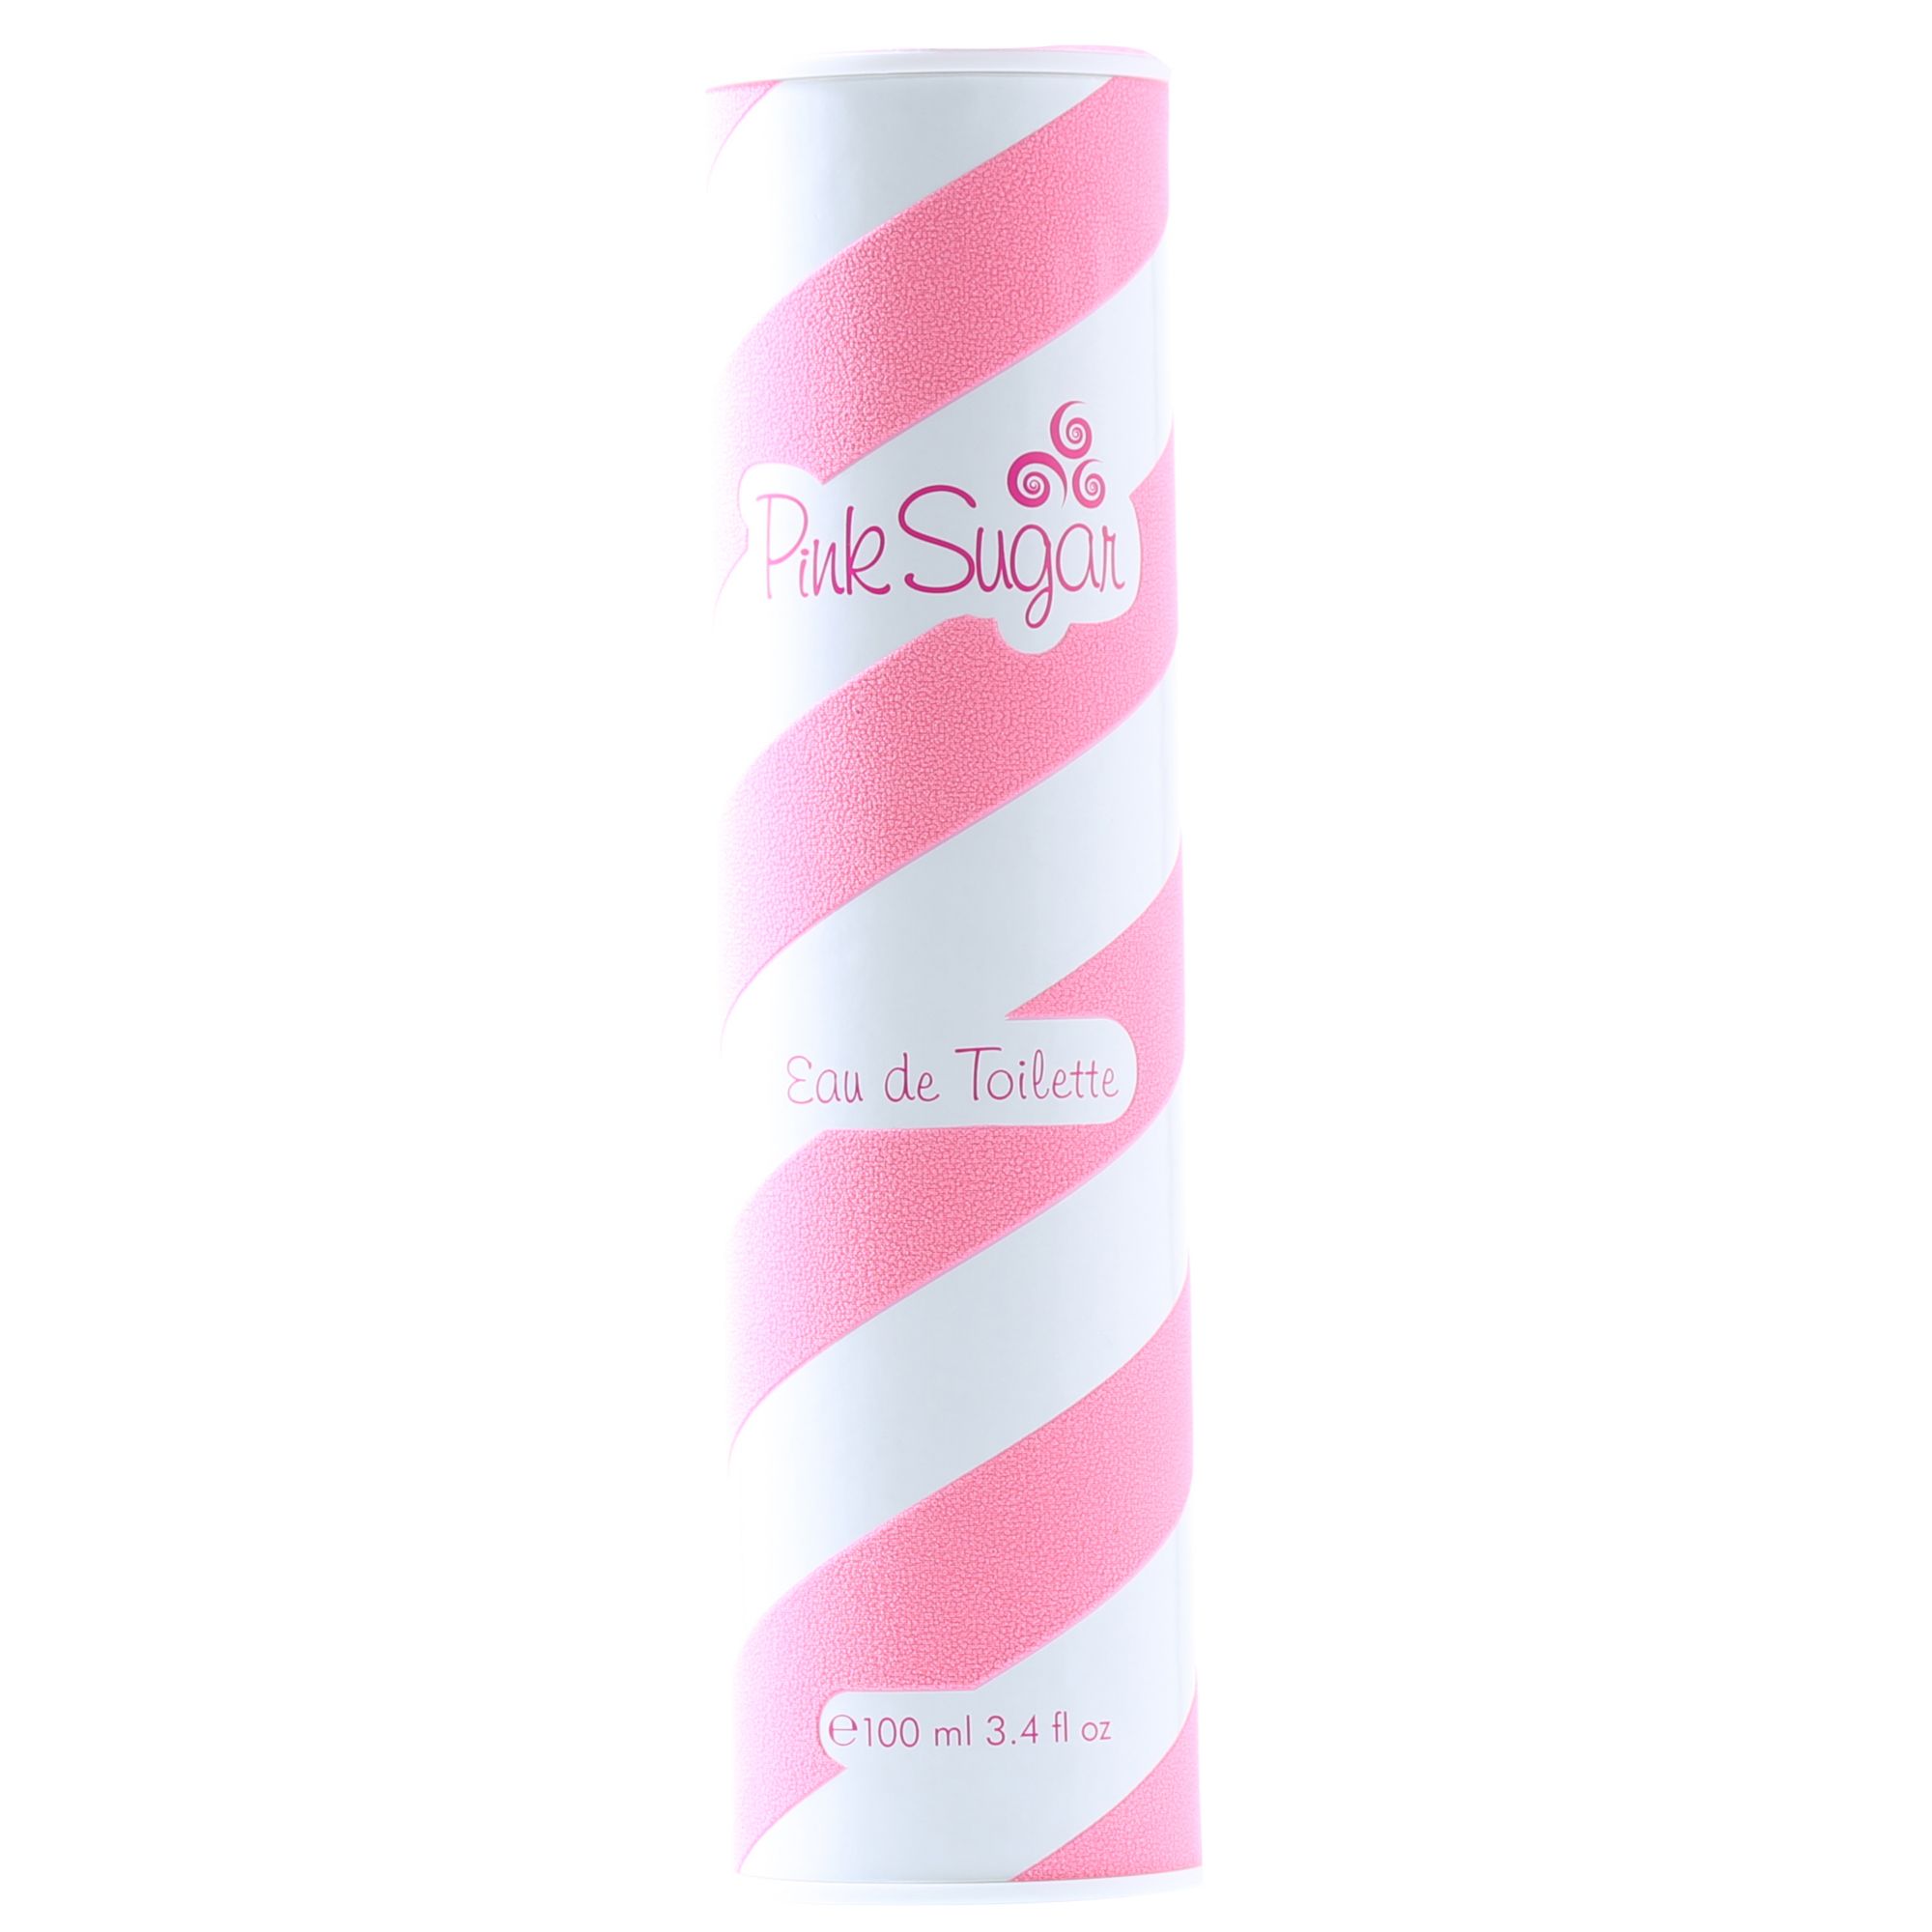 Aquolina Pink Sugar Women's EDT Spray - 3.4 fl oz can